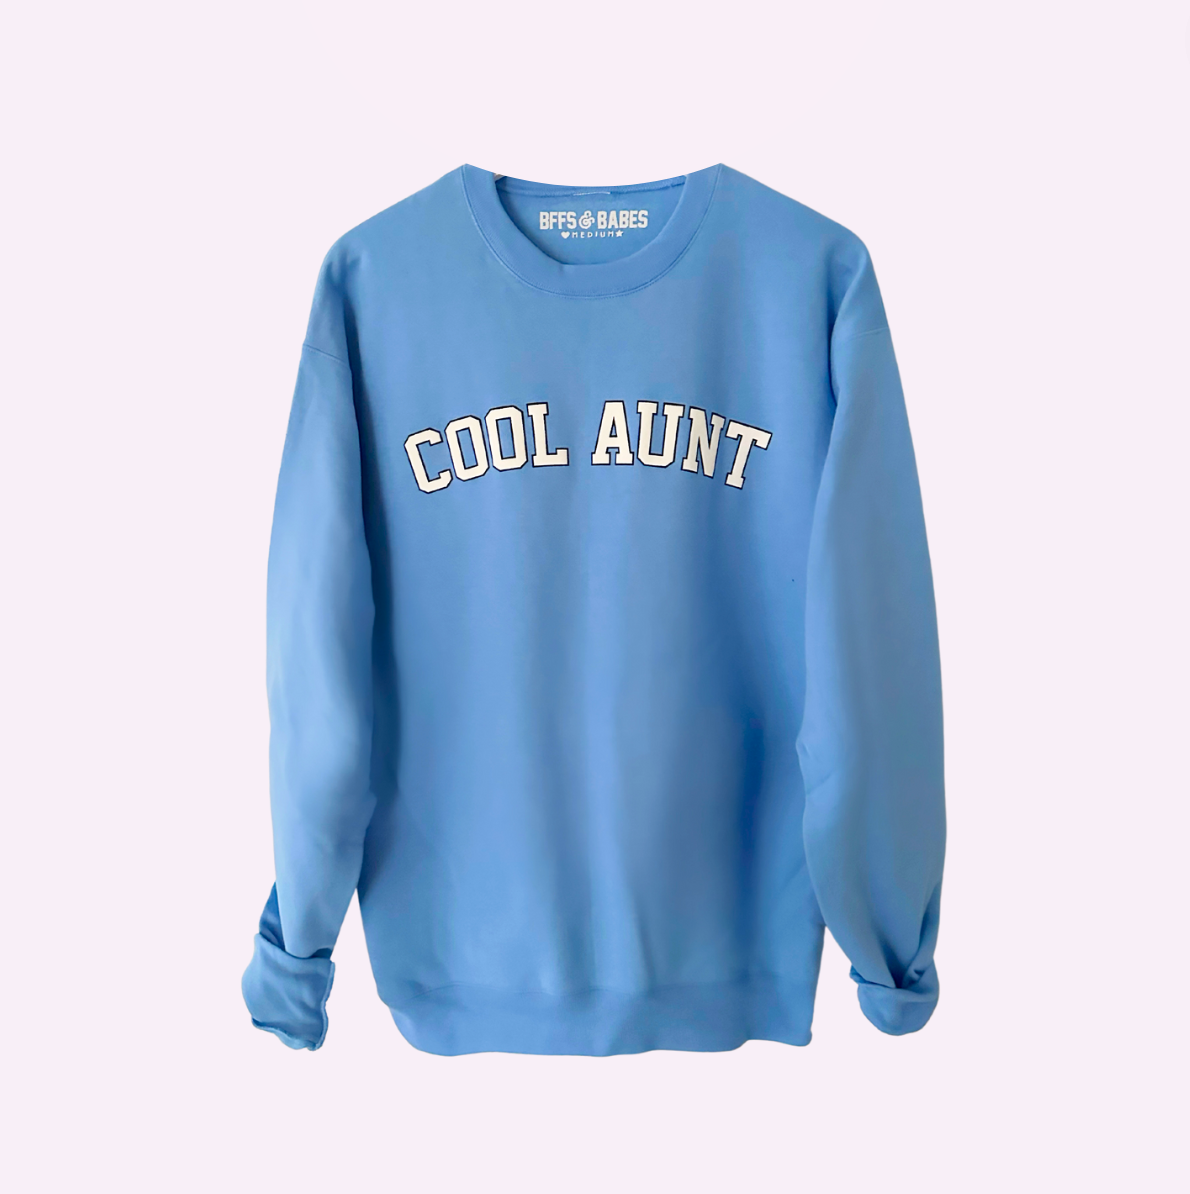 COLLEGIATE AUNT ♡ beige printed cool aunt sweatshirt